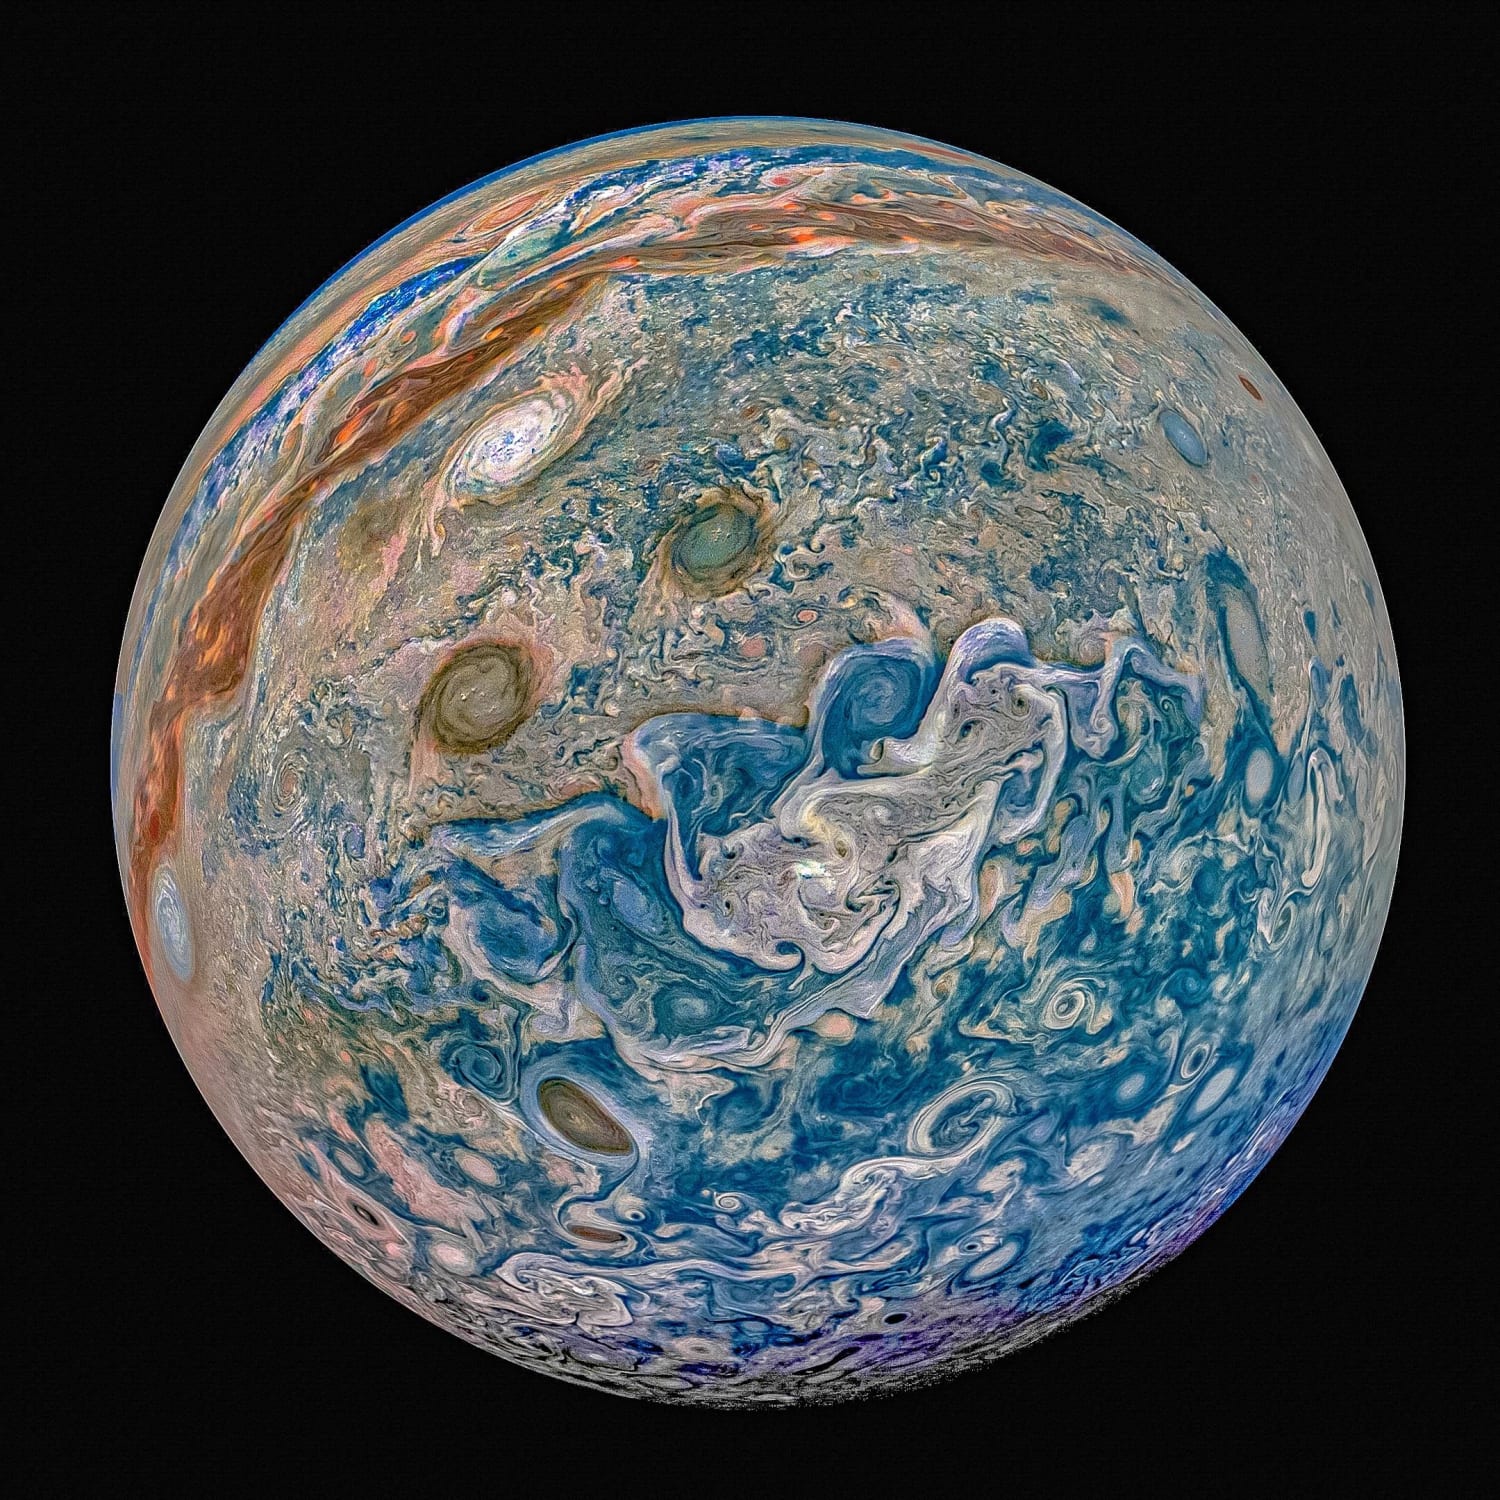 Jupiter as seen by Juno